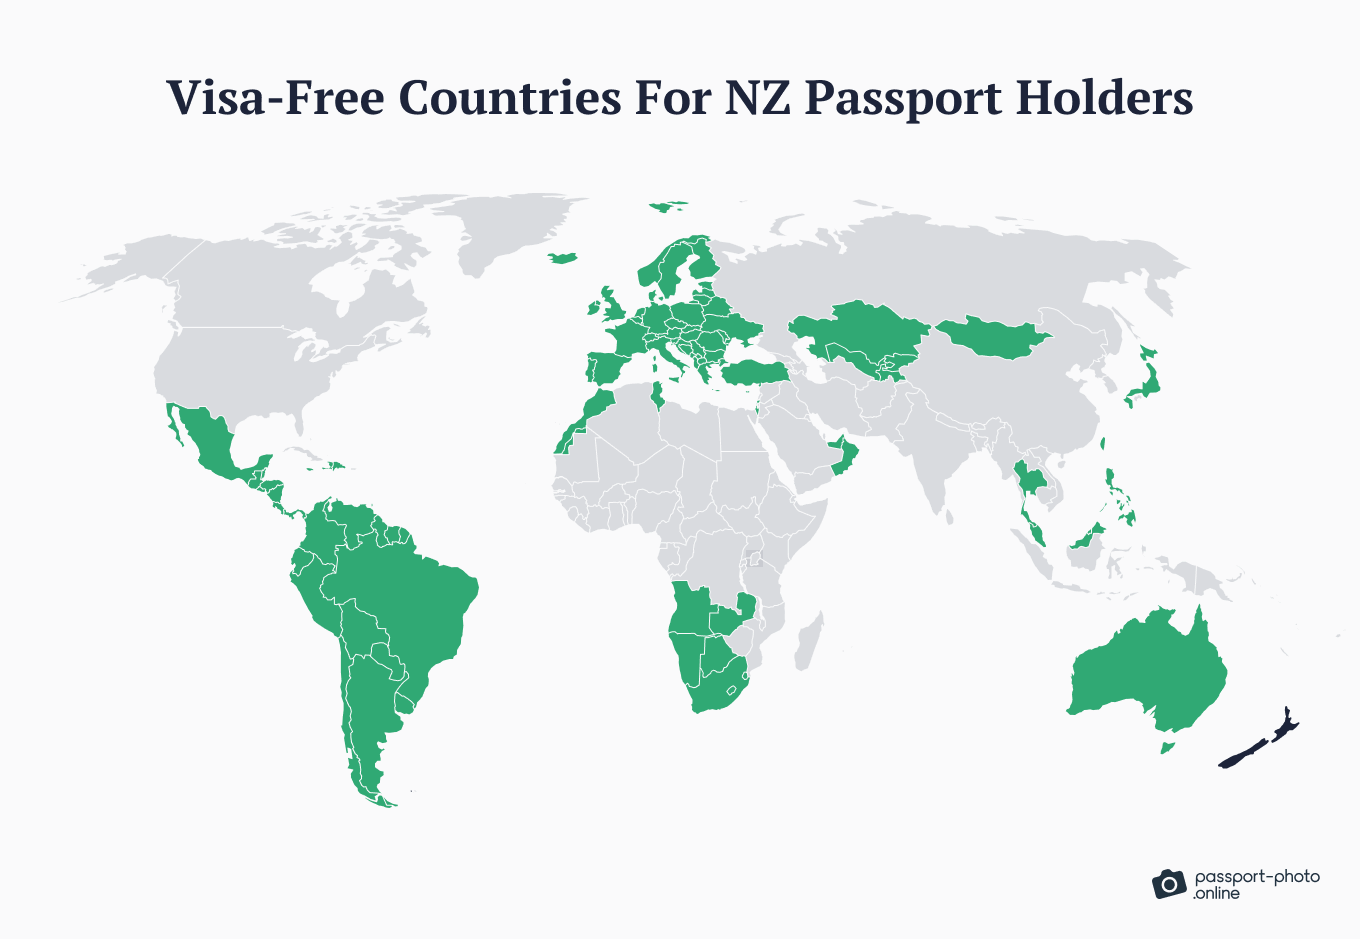 NZ passport visa-free countries list.